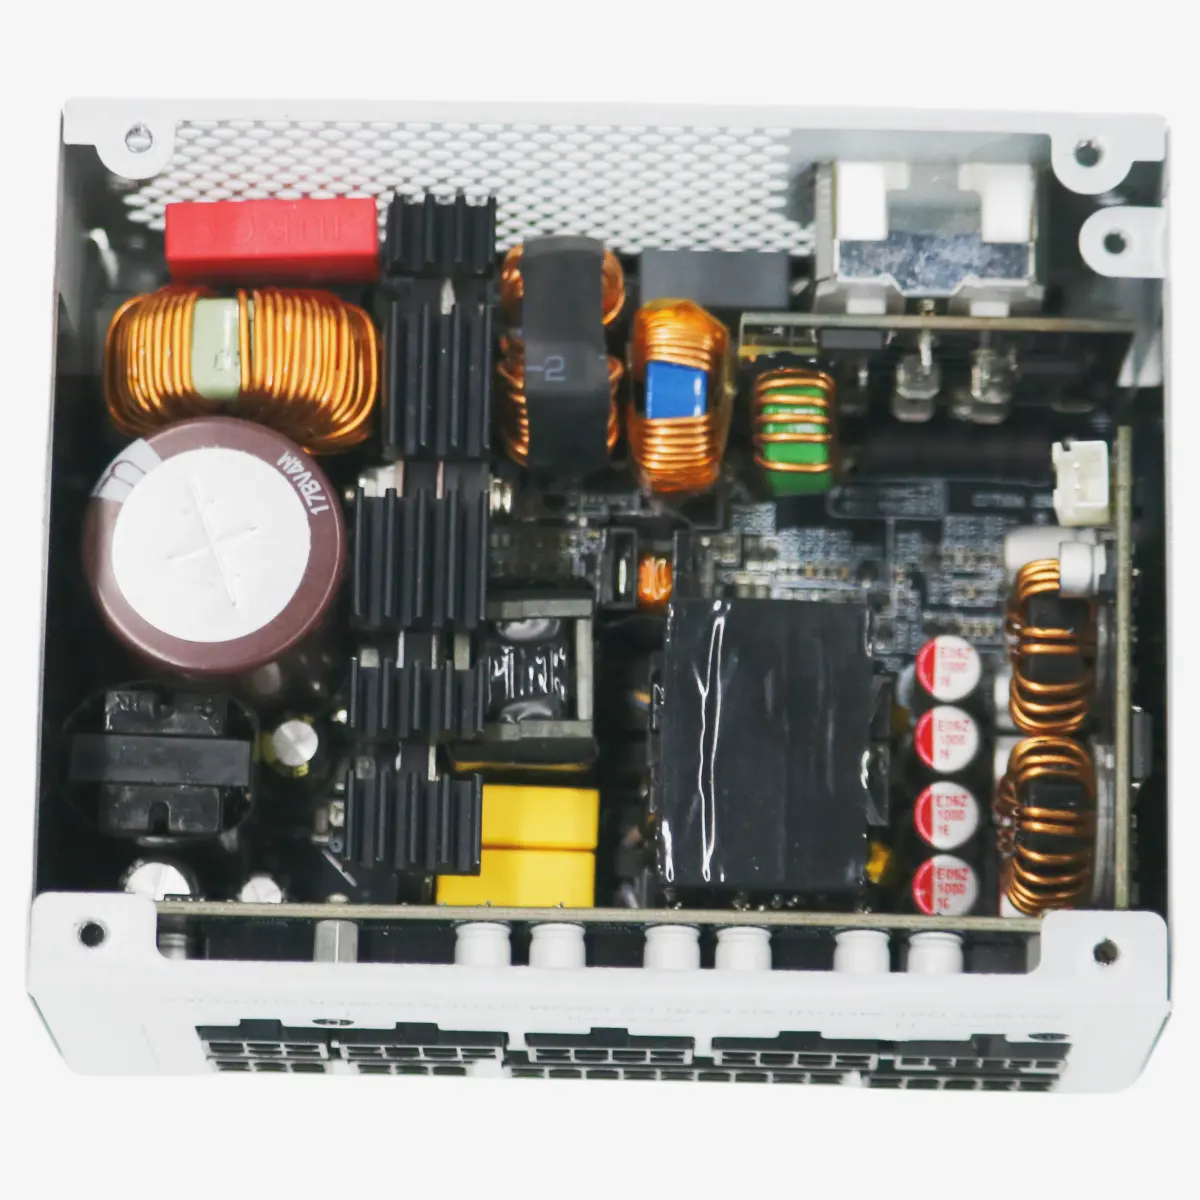 OEM PC 전원 공급 장치 80Plus + 골드 미니 마이크로 SFX 데스크탑 서버용 650W 750W 850W 완전 모듈식 게임용 저소음 전원 공급 장치